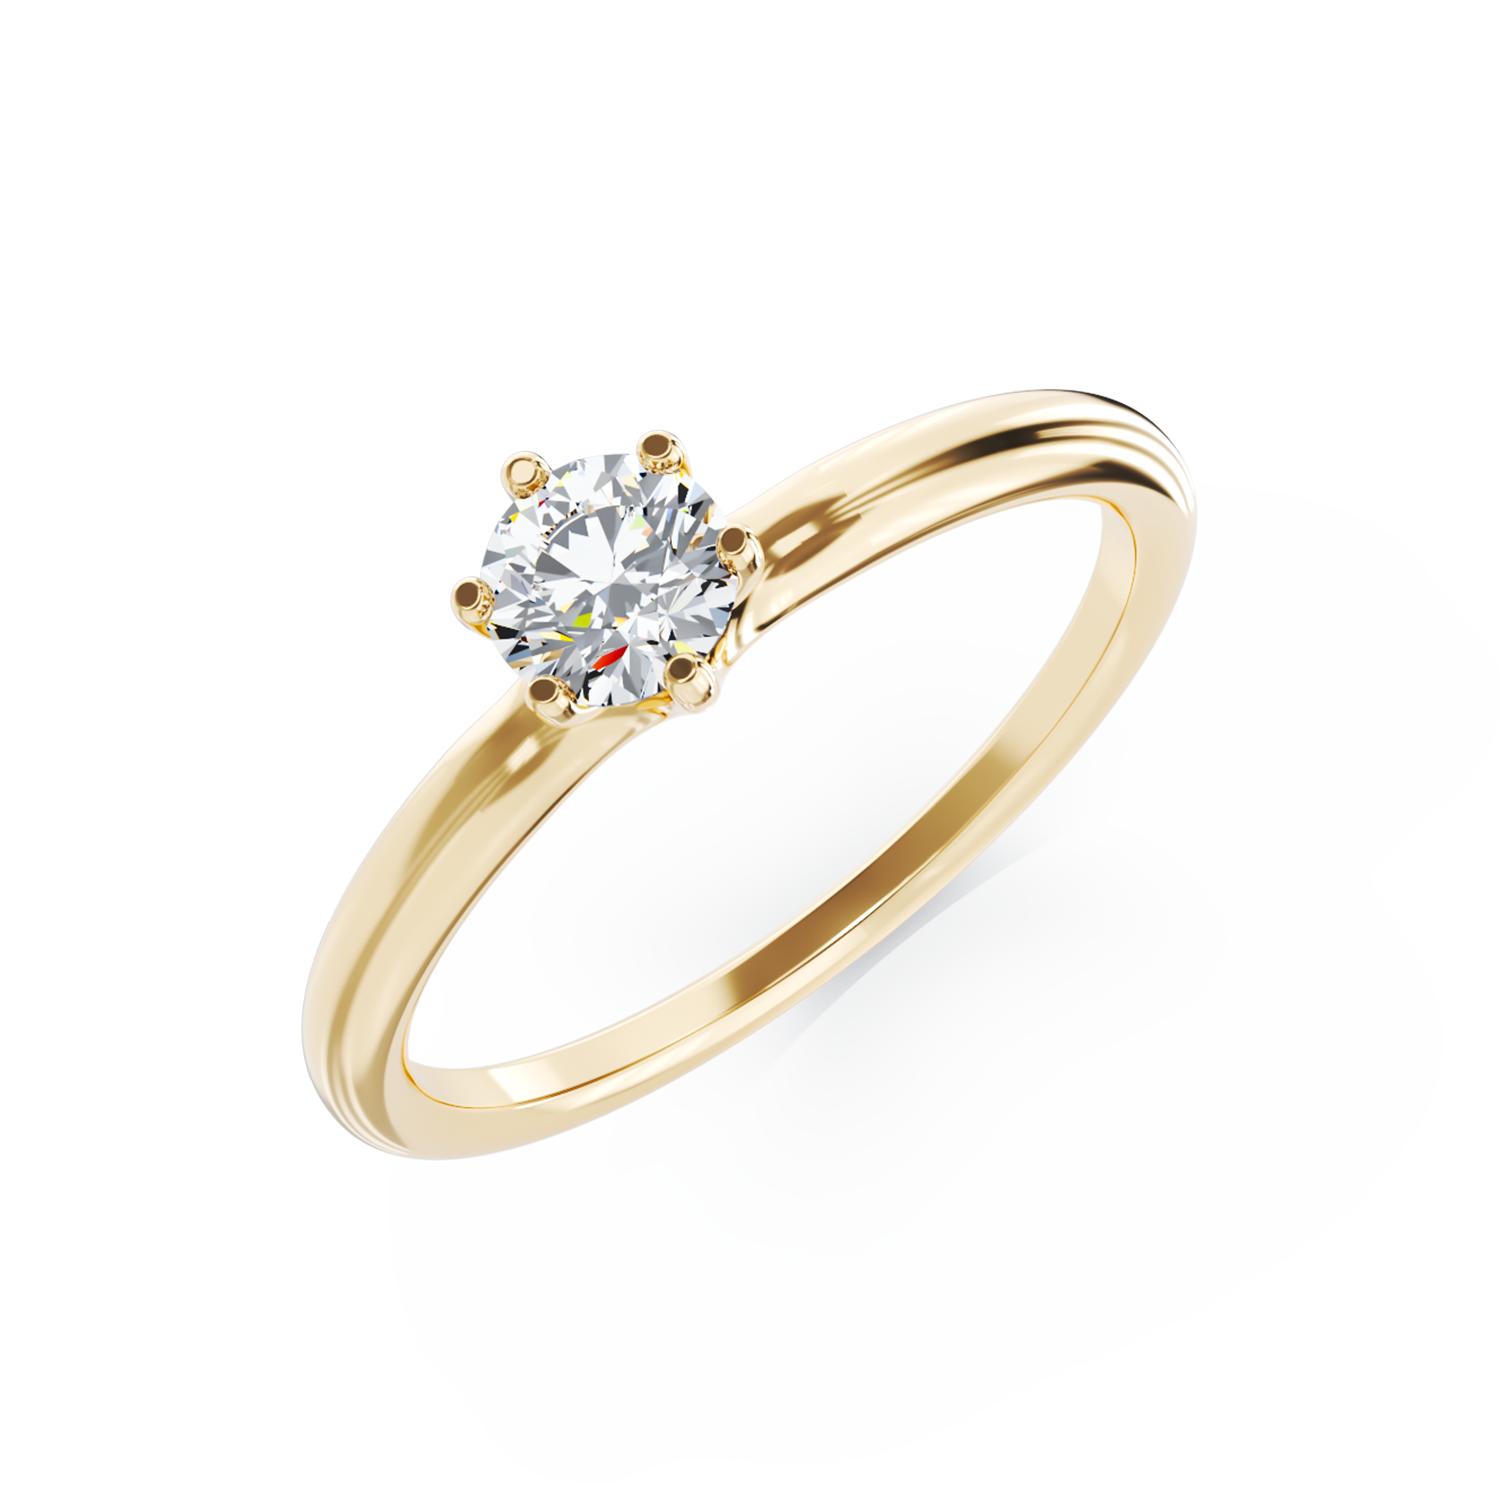 Inel de logodna din aur galben de 18K cu un diamant solitaire de 0.3ct